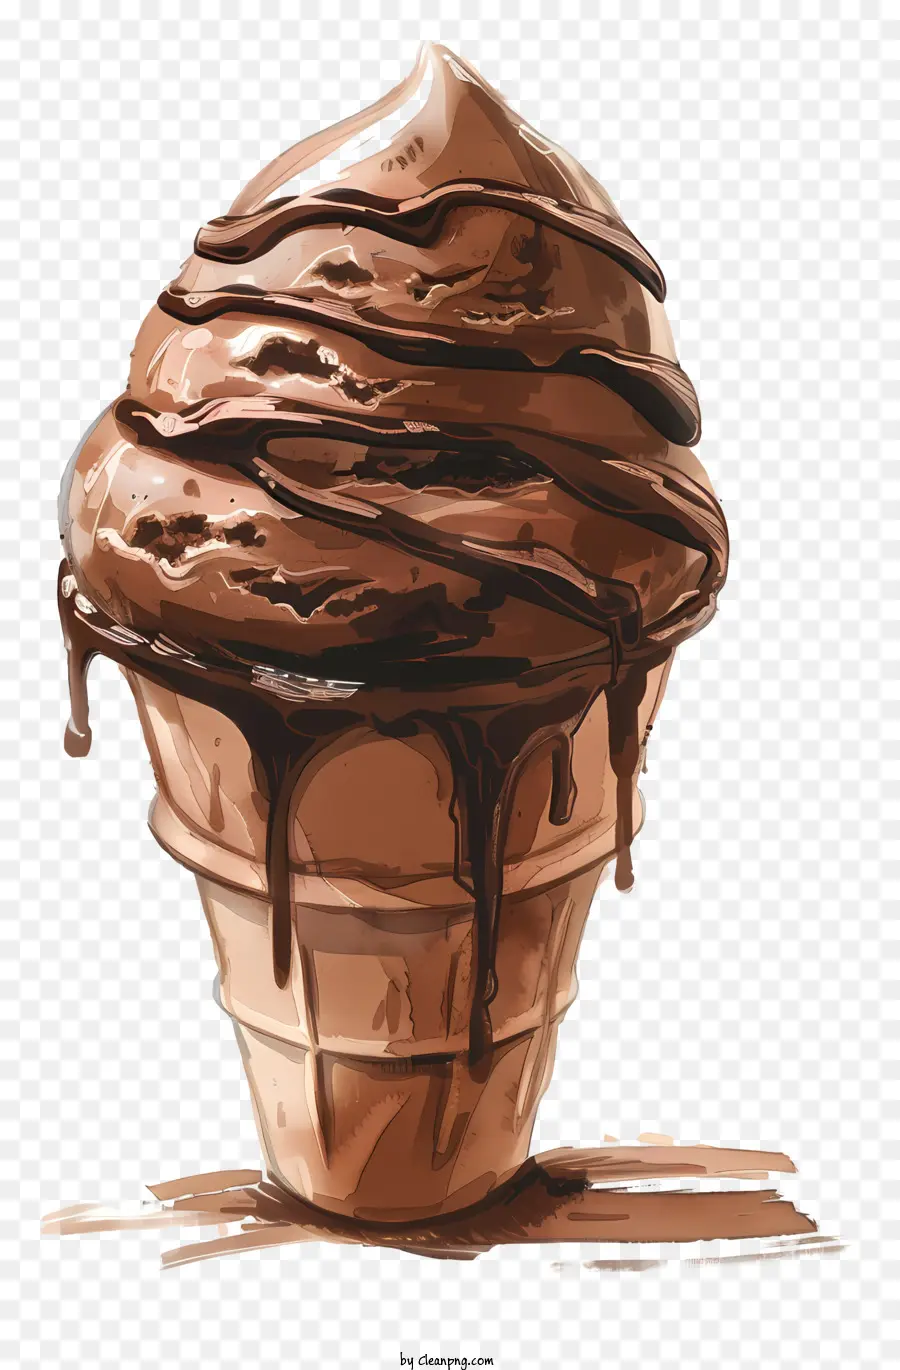 gelato al cioccolato cono gelato al cioccolato gocciolante salsa al cioccolato cono cioccolato gelato marrone - Cono gelato al cioccolato con salsa gocciolante